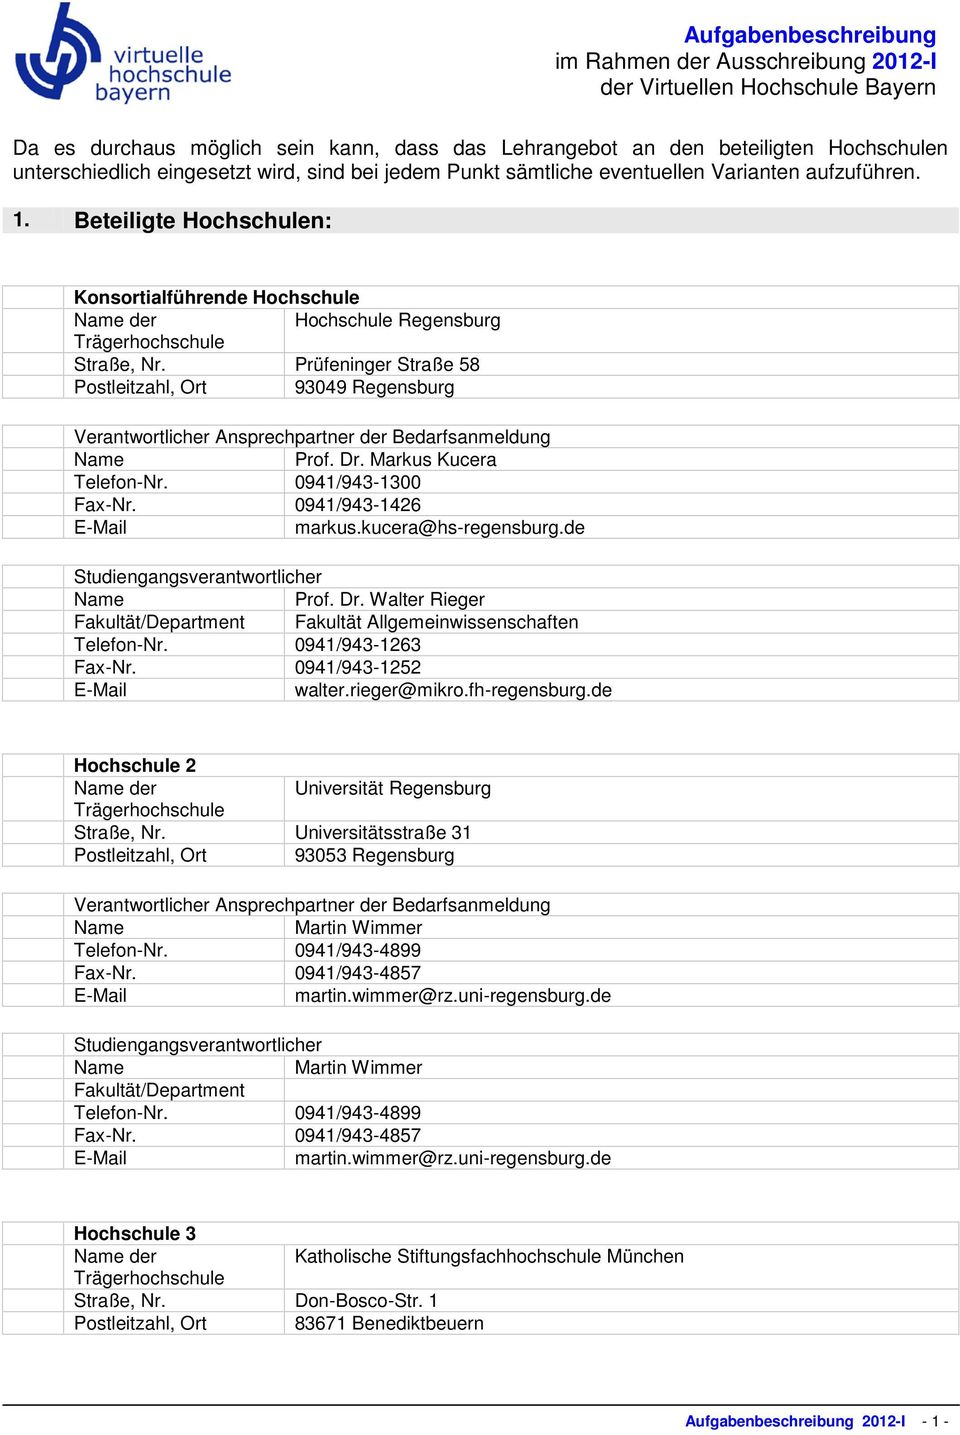 Prüfeninger Straße 58 Postleitzahl Ort 93049 Regensburg Verantwortlicher Ansprechpartner der Bedarfsanmeldung Prof. Dr. Markus Kucera Telefon-Nr. 0941/943-1300 Fax-Nr. 0941/943-1426 markus.